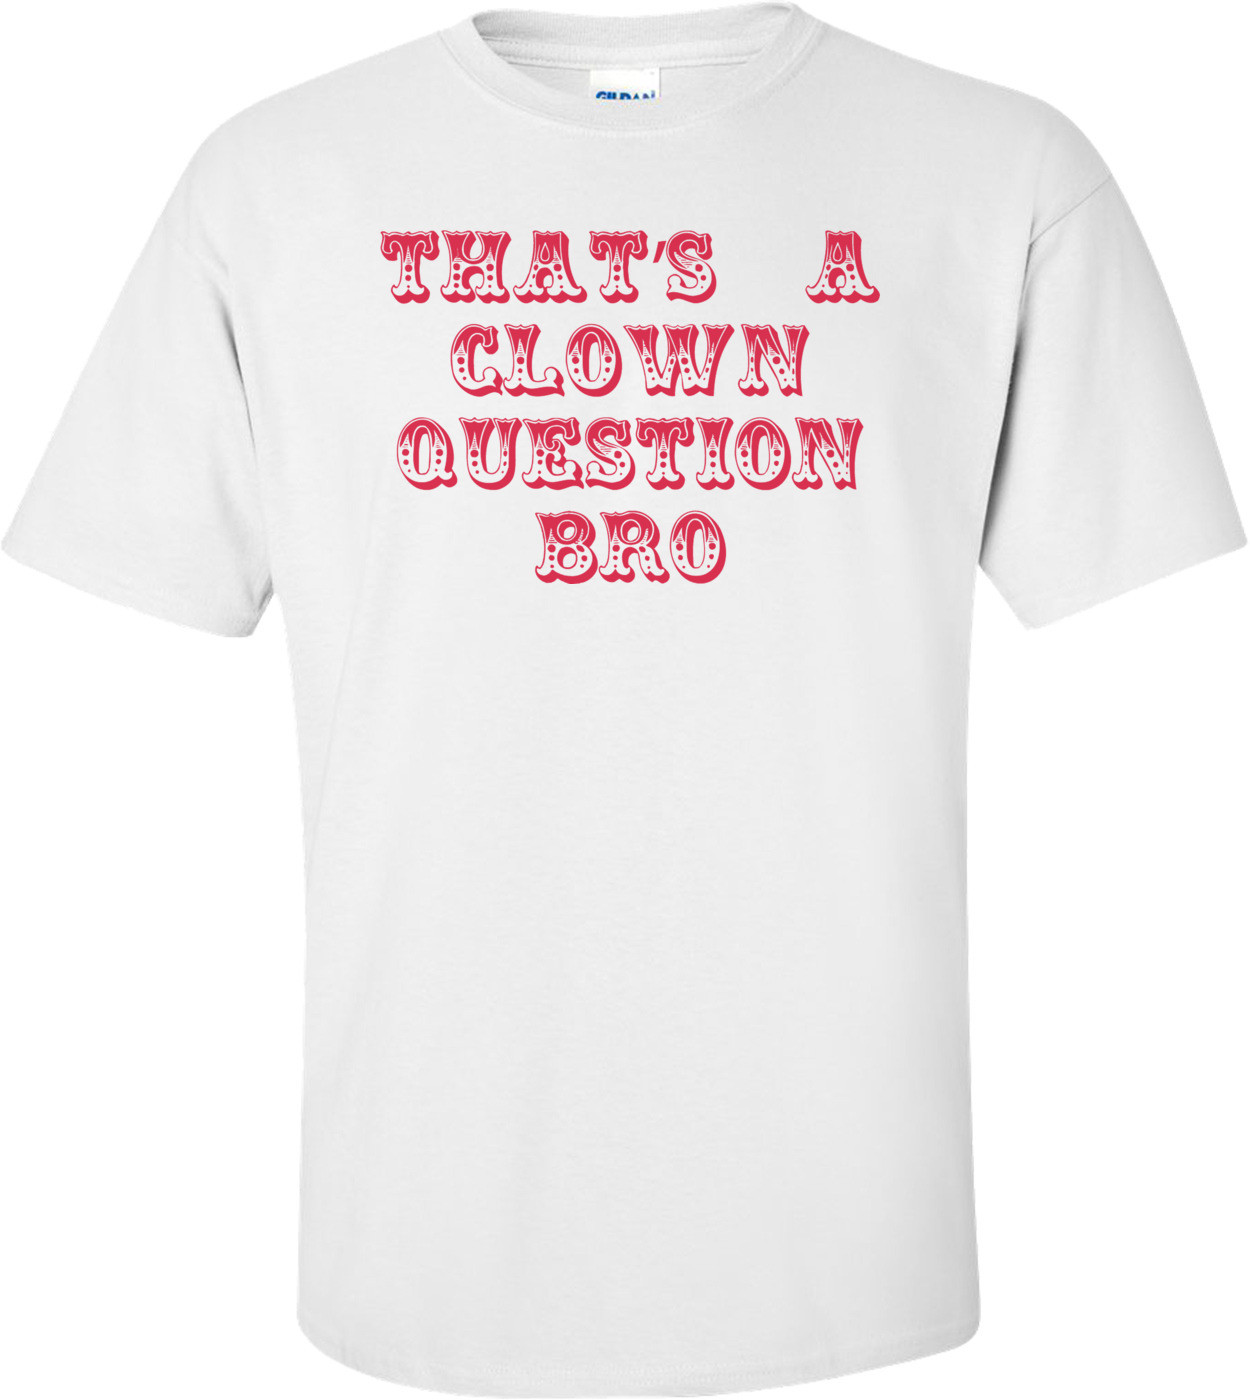 That's A Clown Question Bro - Funny Bryce Harper Shirt